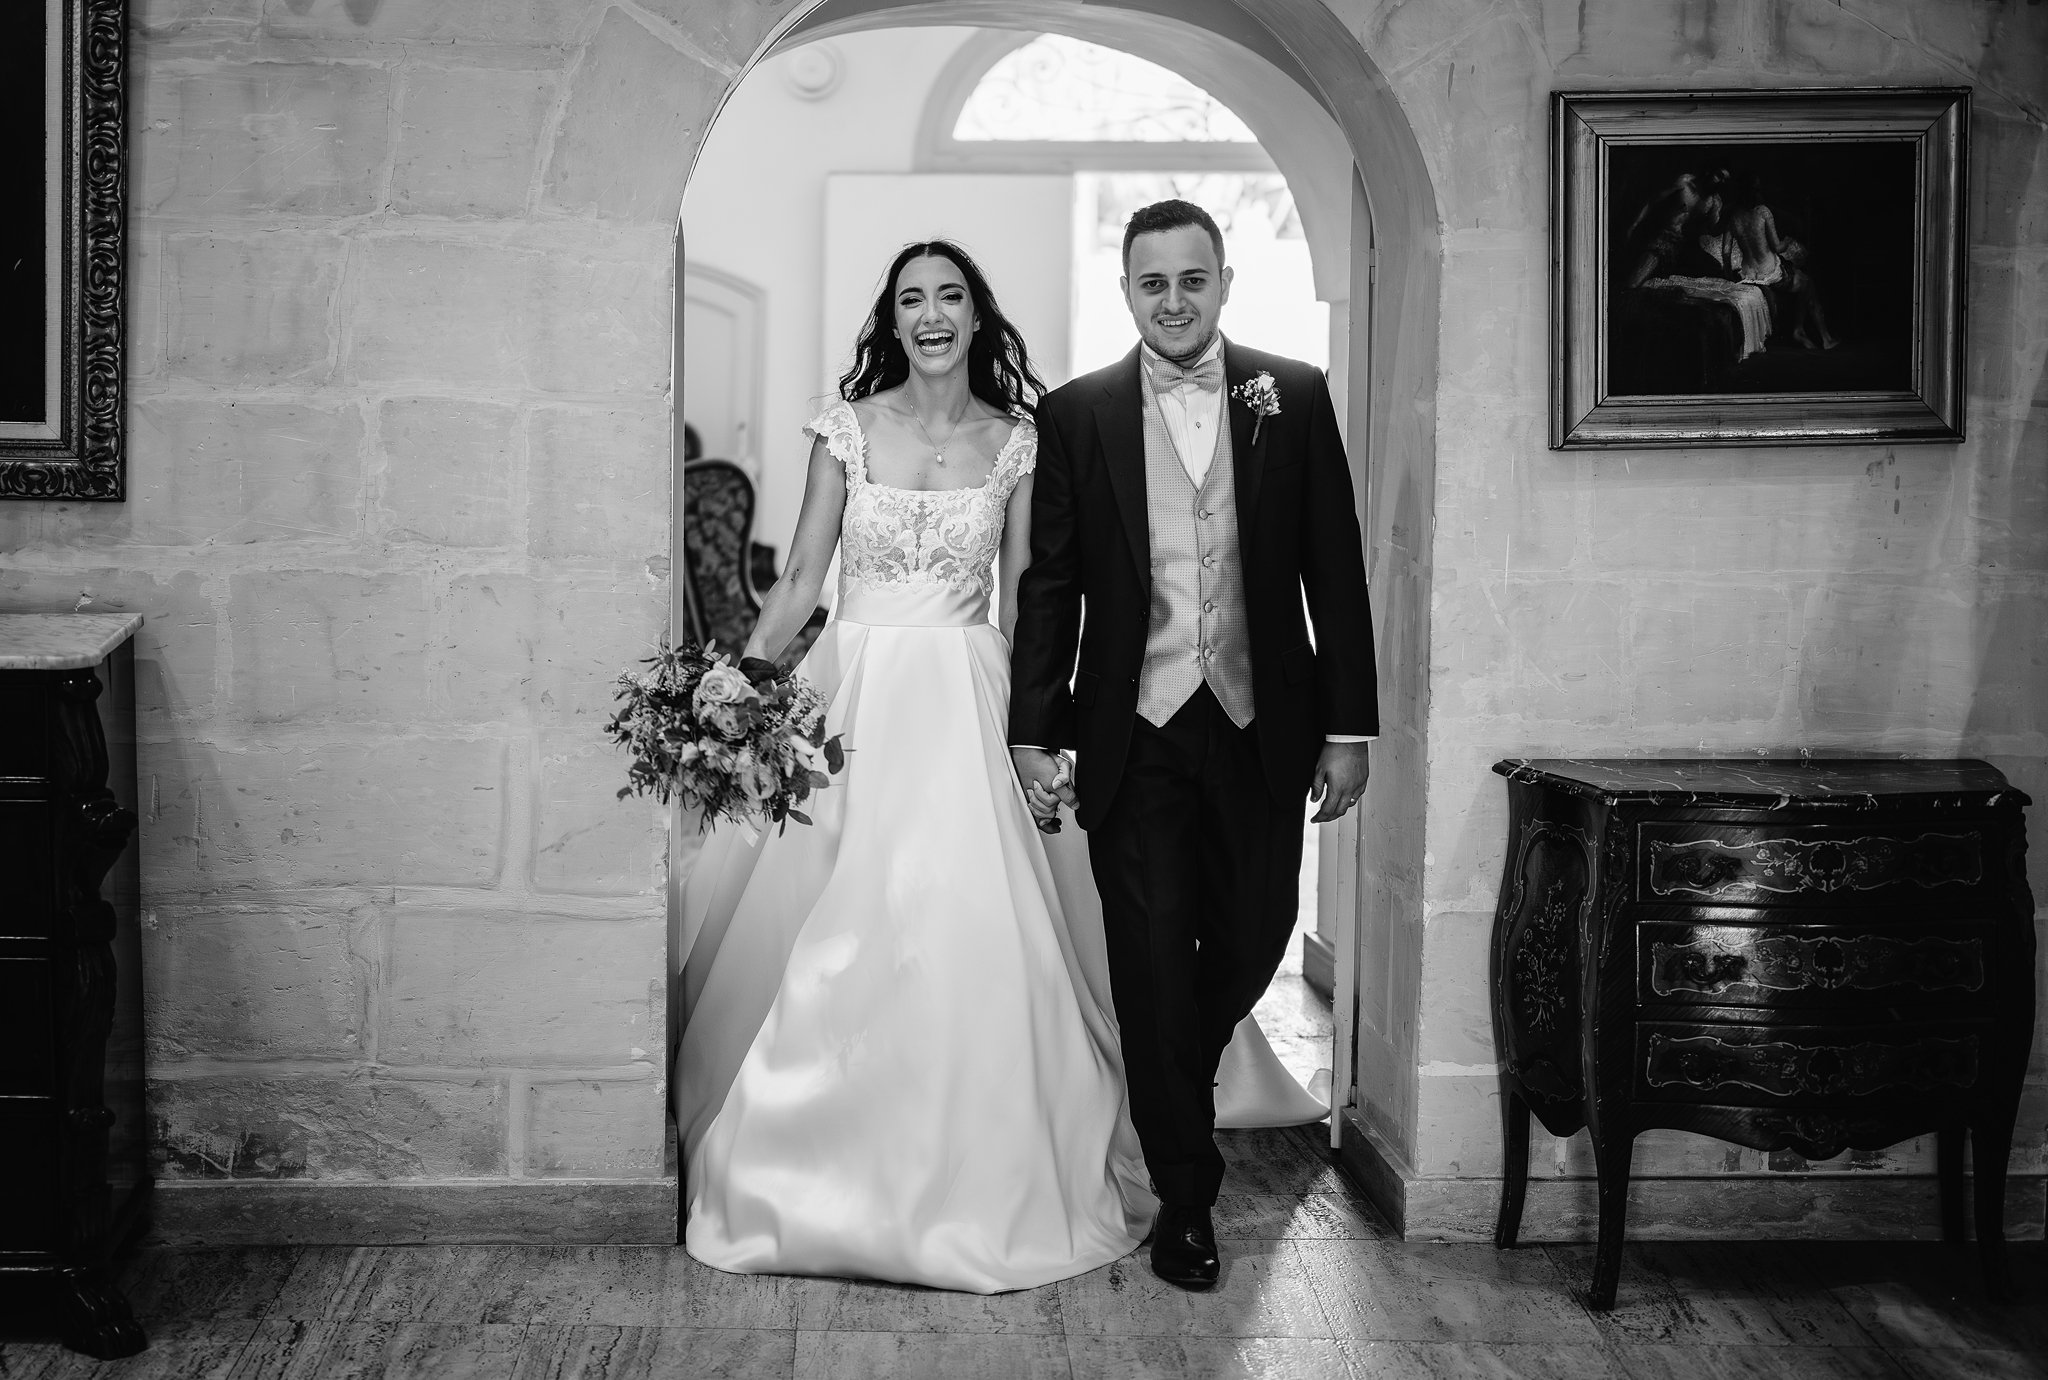 Desiree and Andrei's Wedding at Villa Mdina Naxxar_0053.jpg